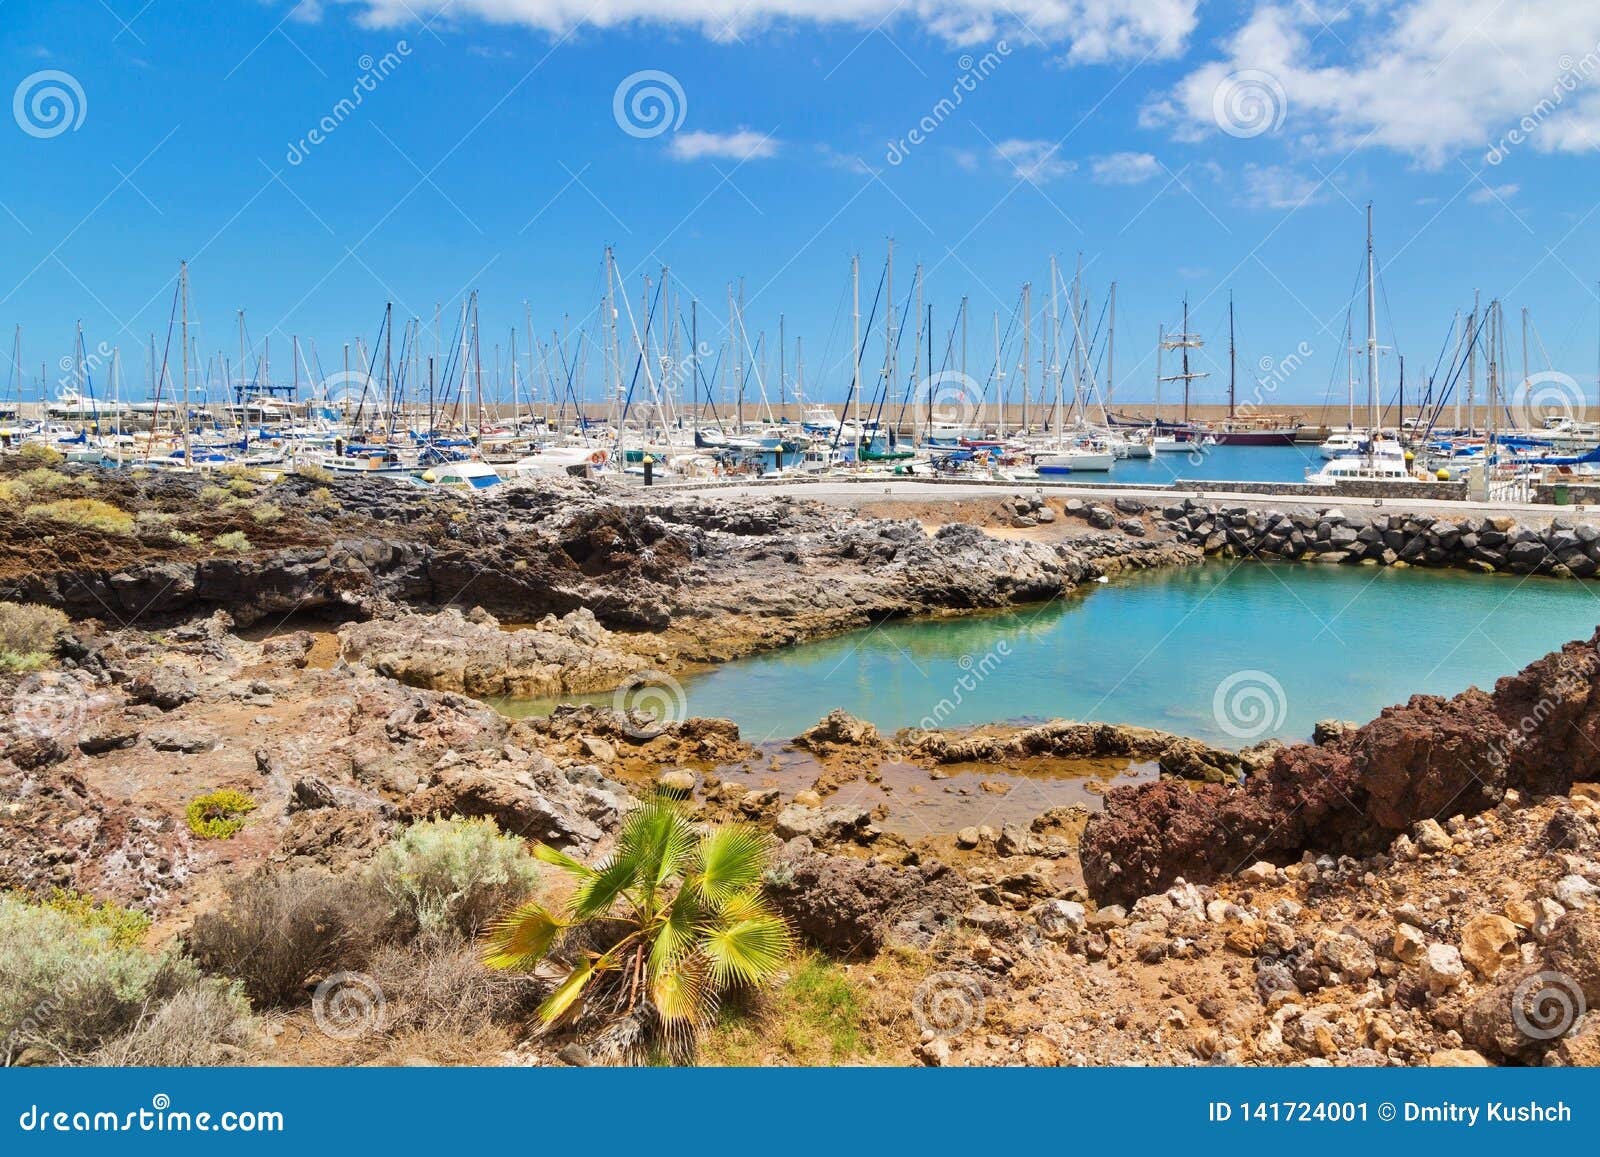 view of the coast and marina of los abrigos